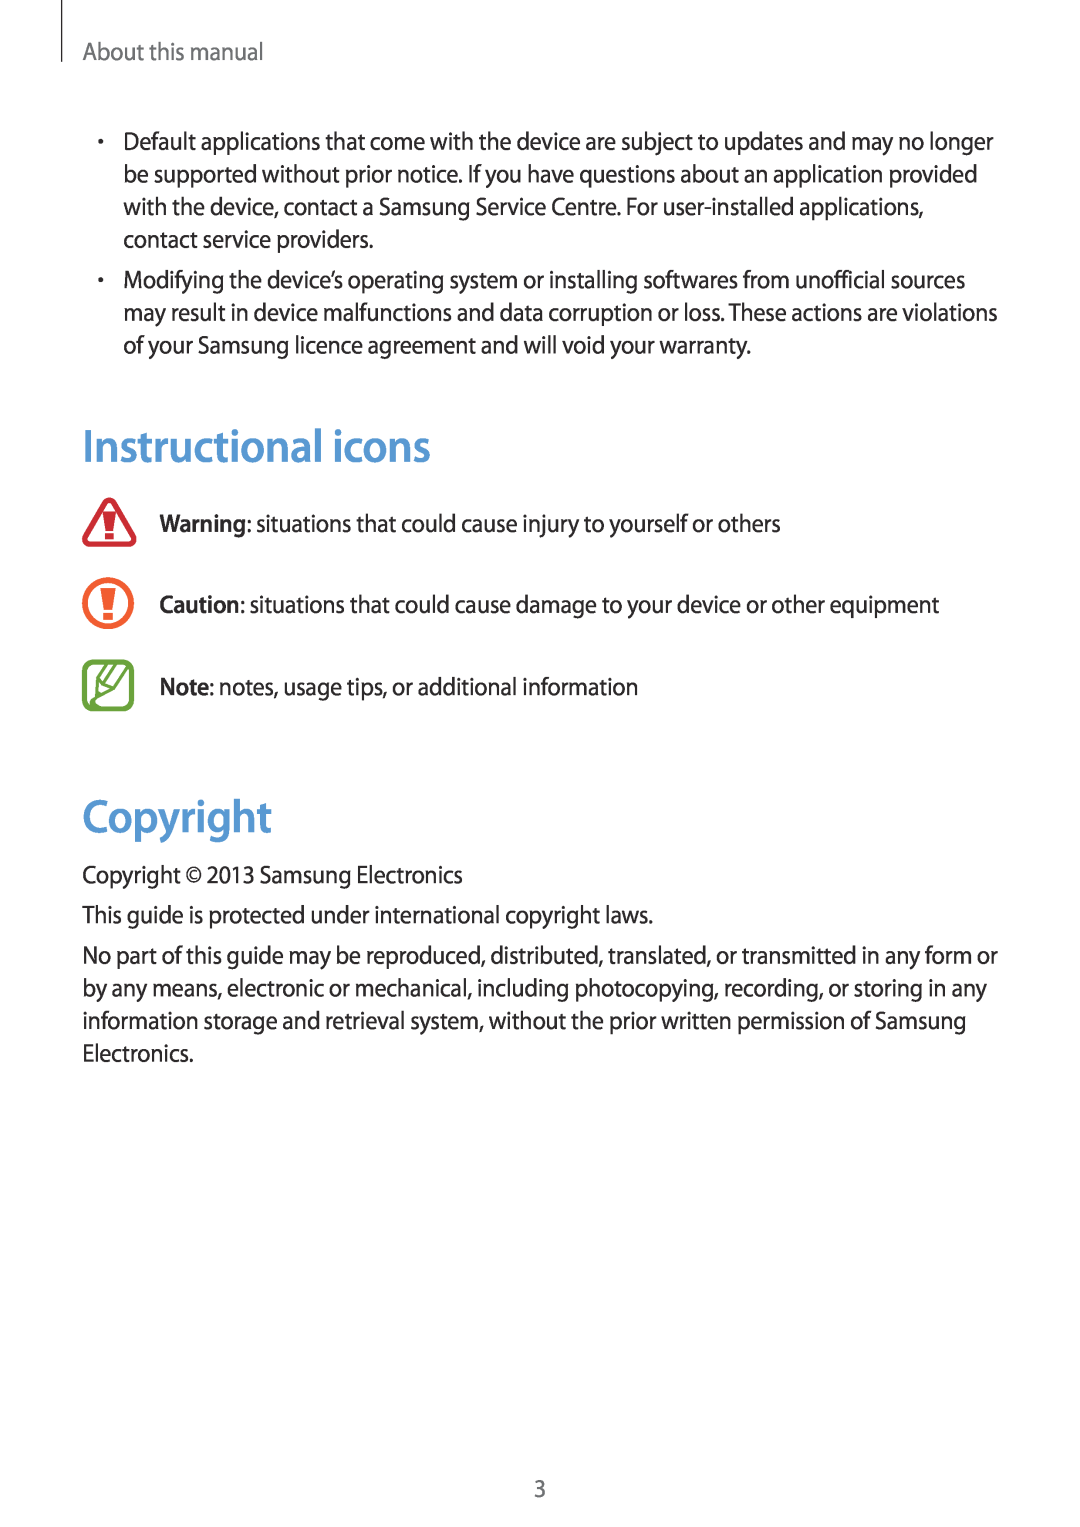 Samsung GT-I8730ZWAITV, GT-I8730TAAVGR, GT-I8730ZWAVD2, GT-I8730ZWAMEO Instructional icons, Copyright, About this manual 